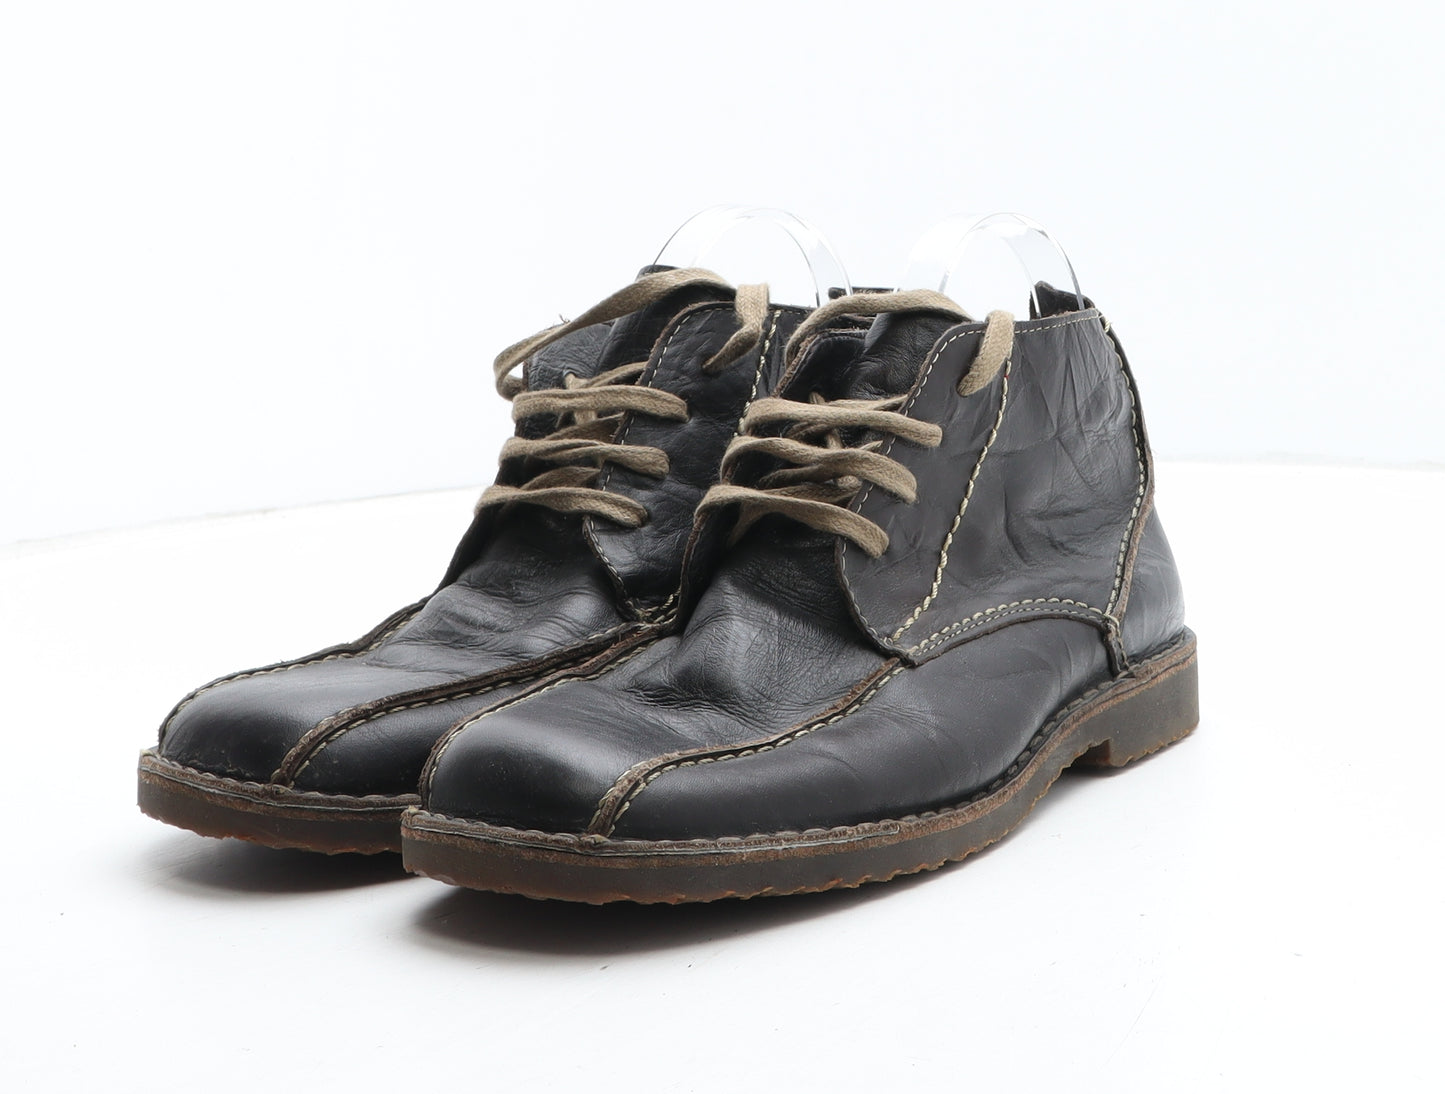 NEXT Mens Brown Leather Chukka Boot UK 6.5